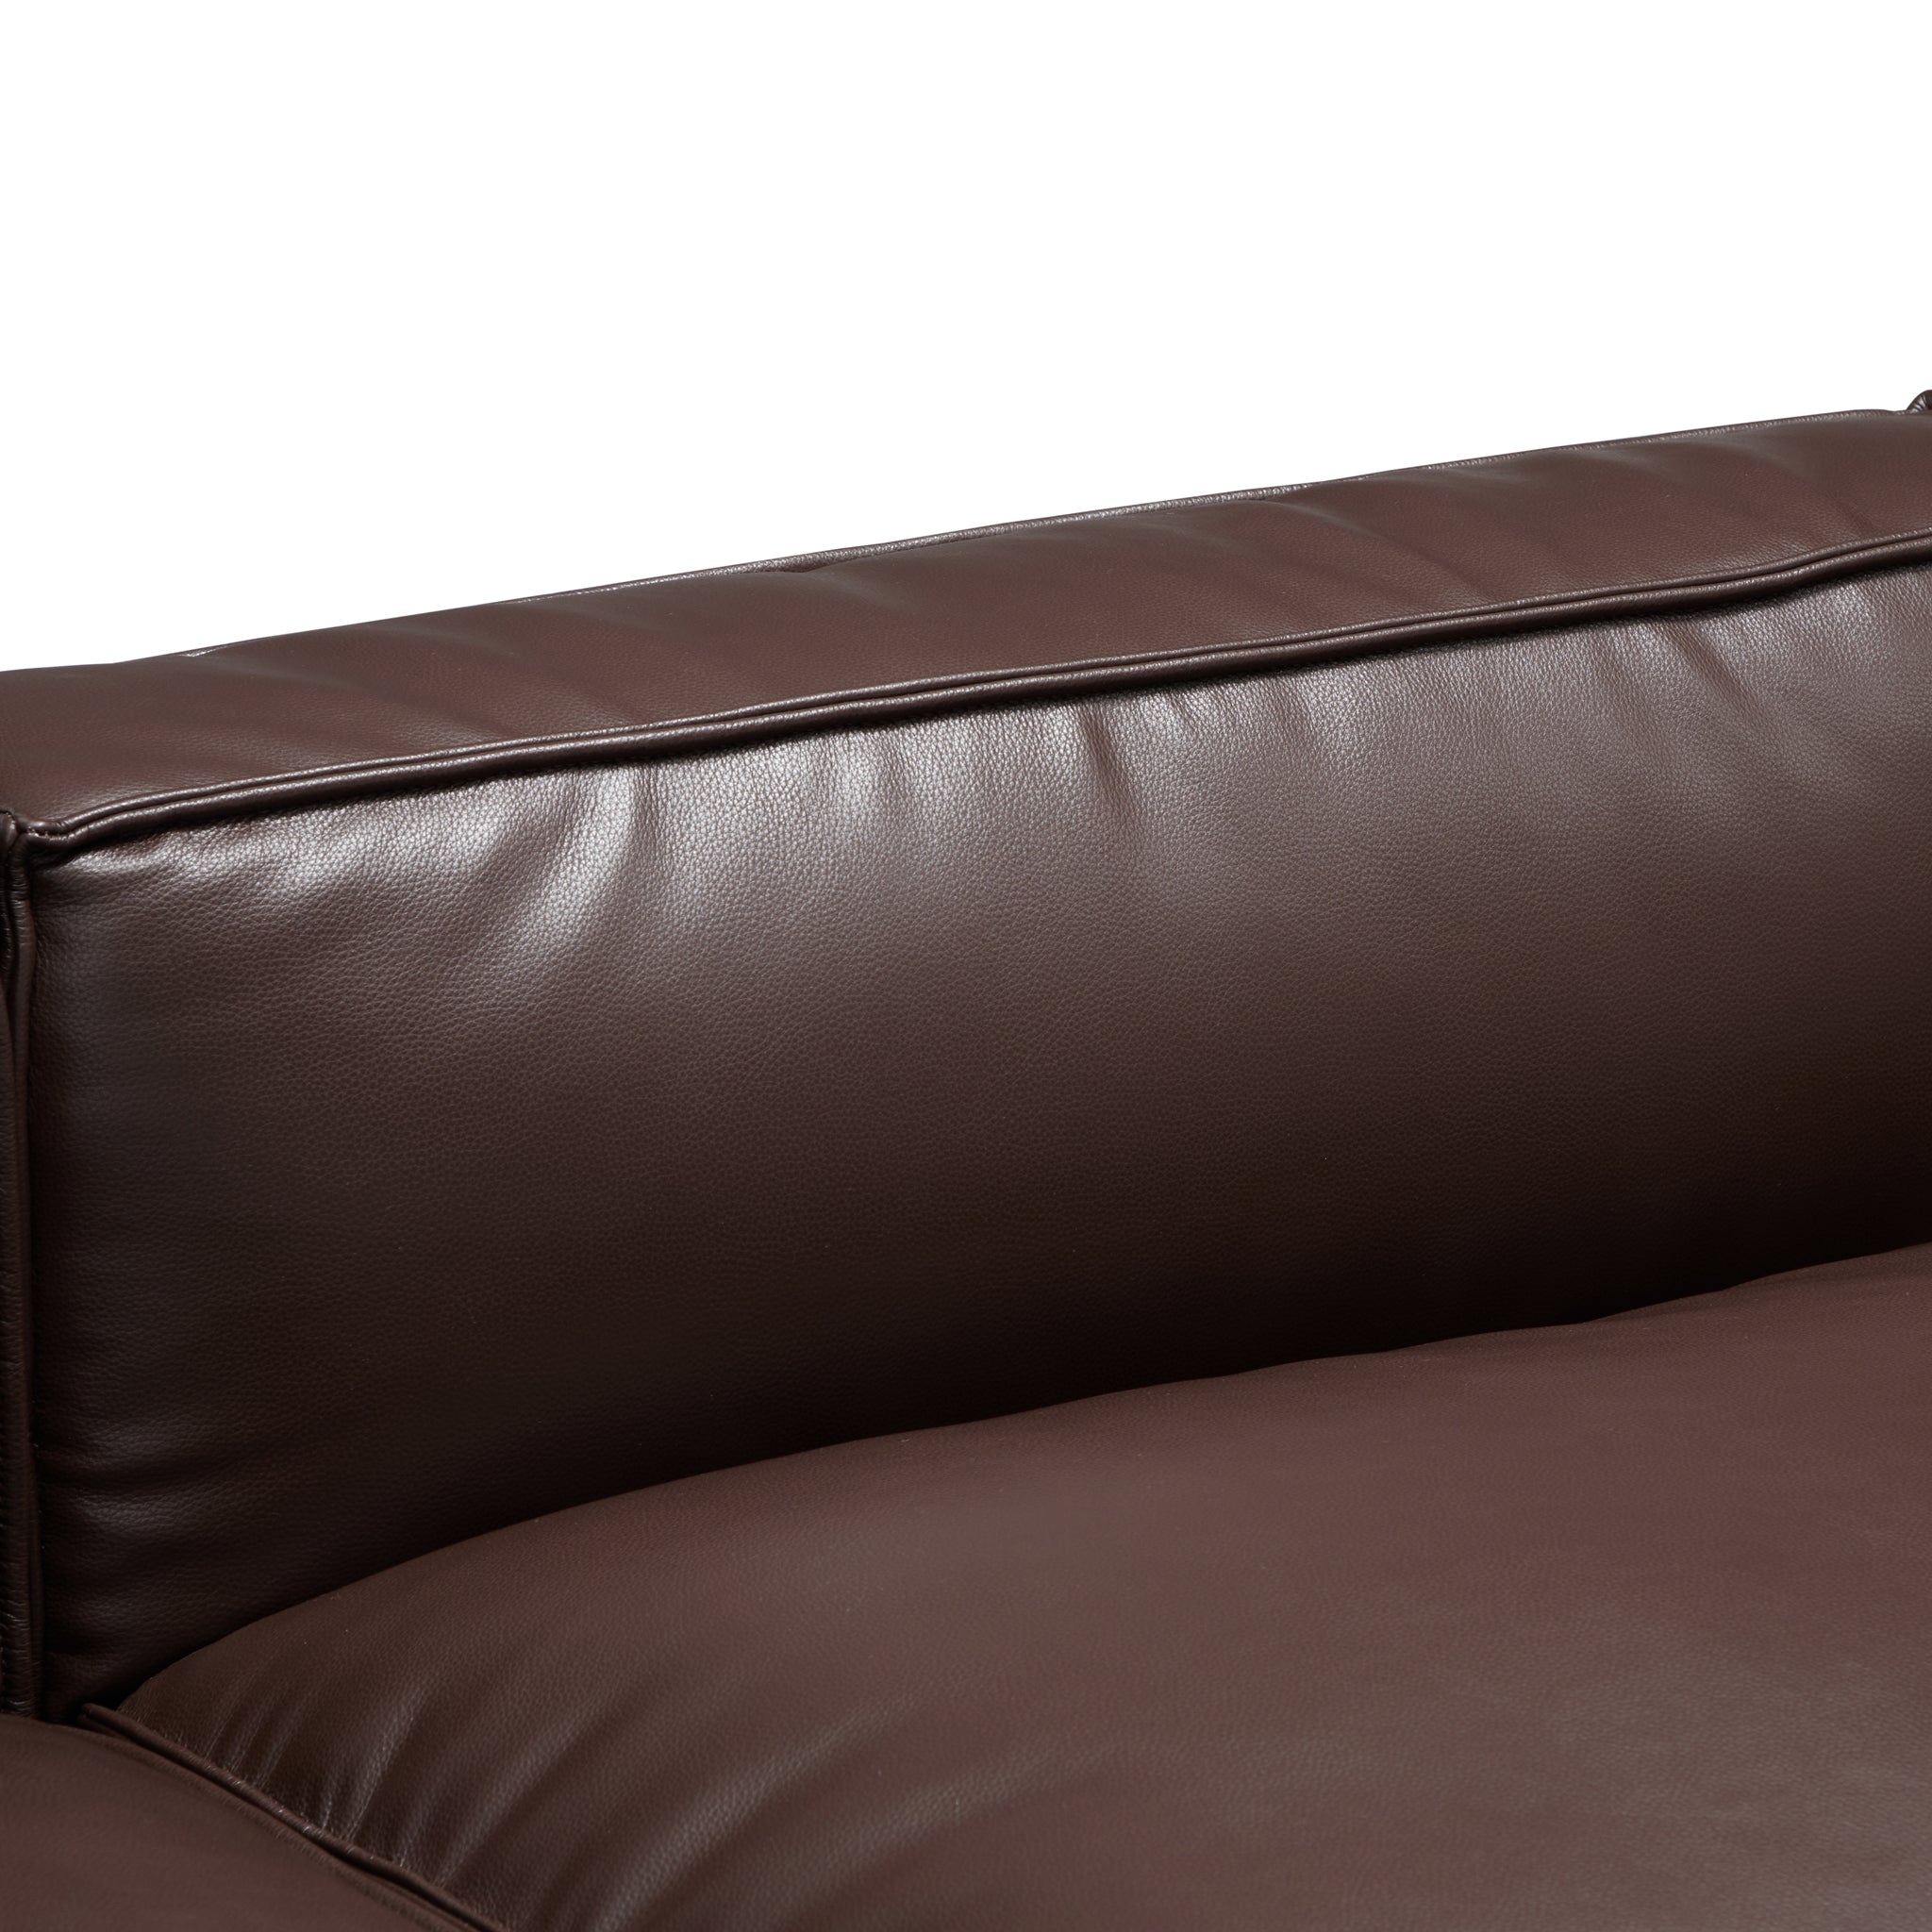 Luxury Minimalist Dark Brown Leather Sofa and Ottoman